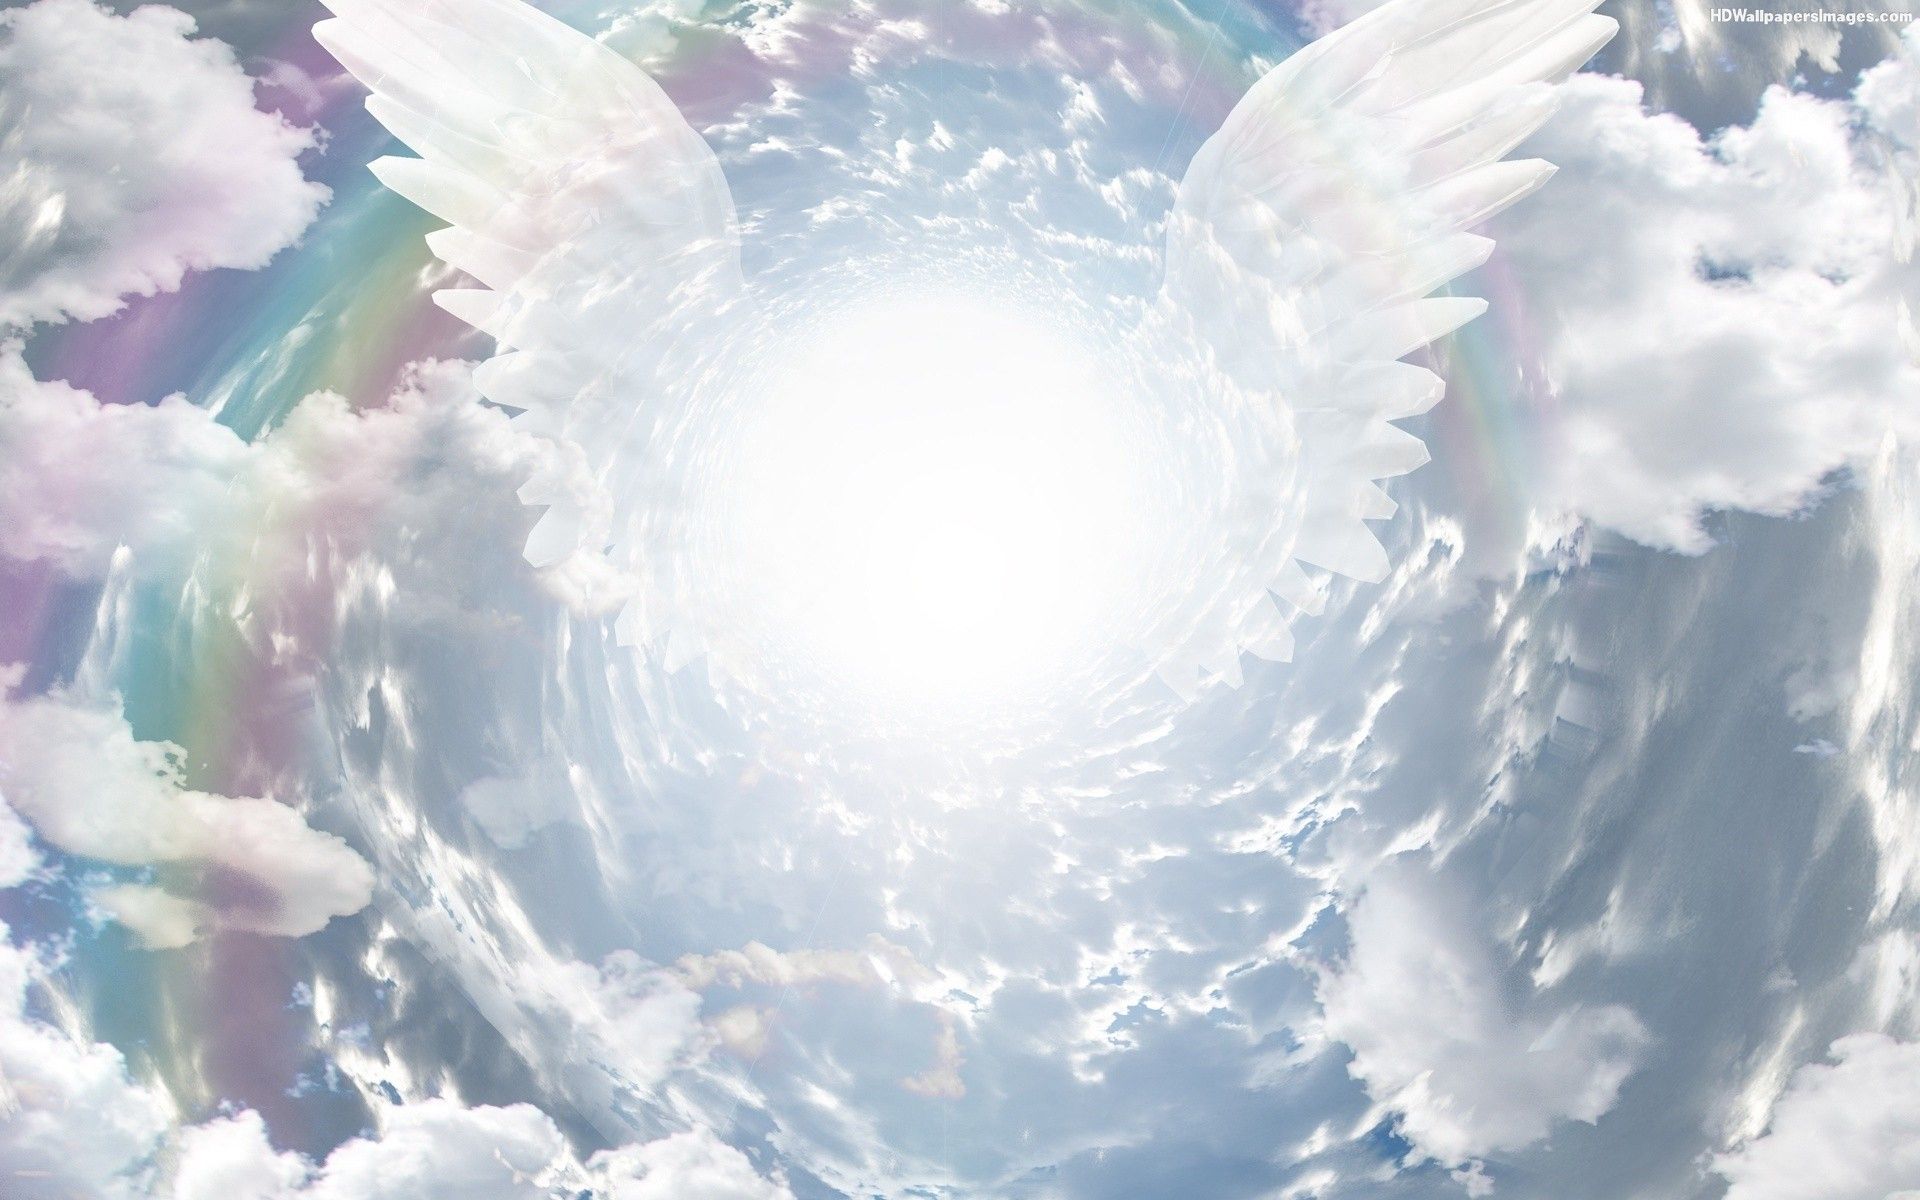 An angel's wings are spread open in the sky - Wings